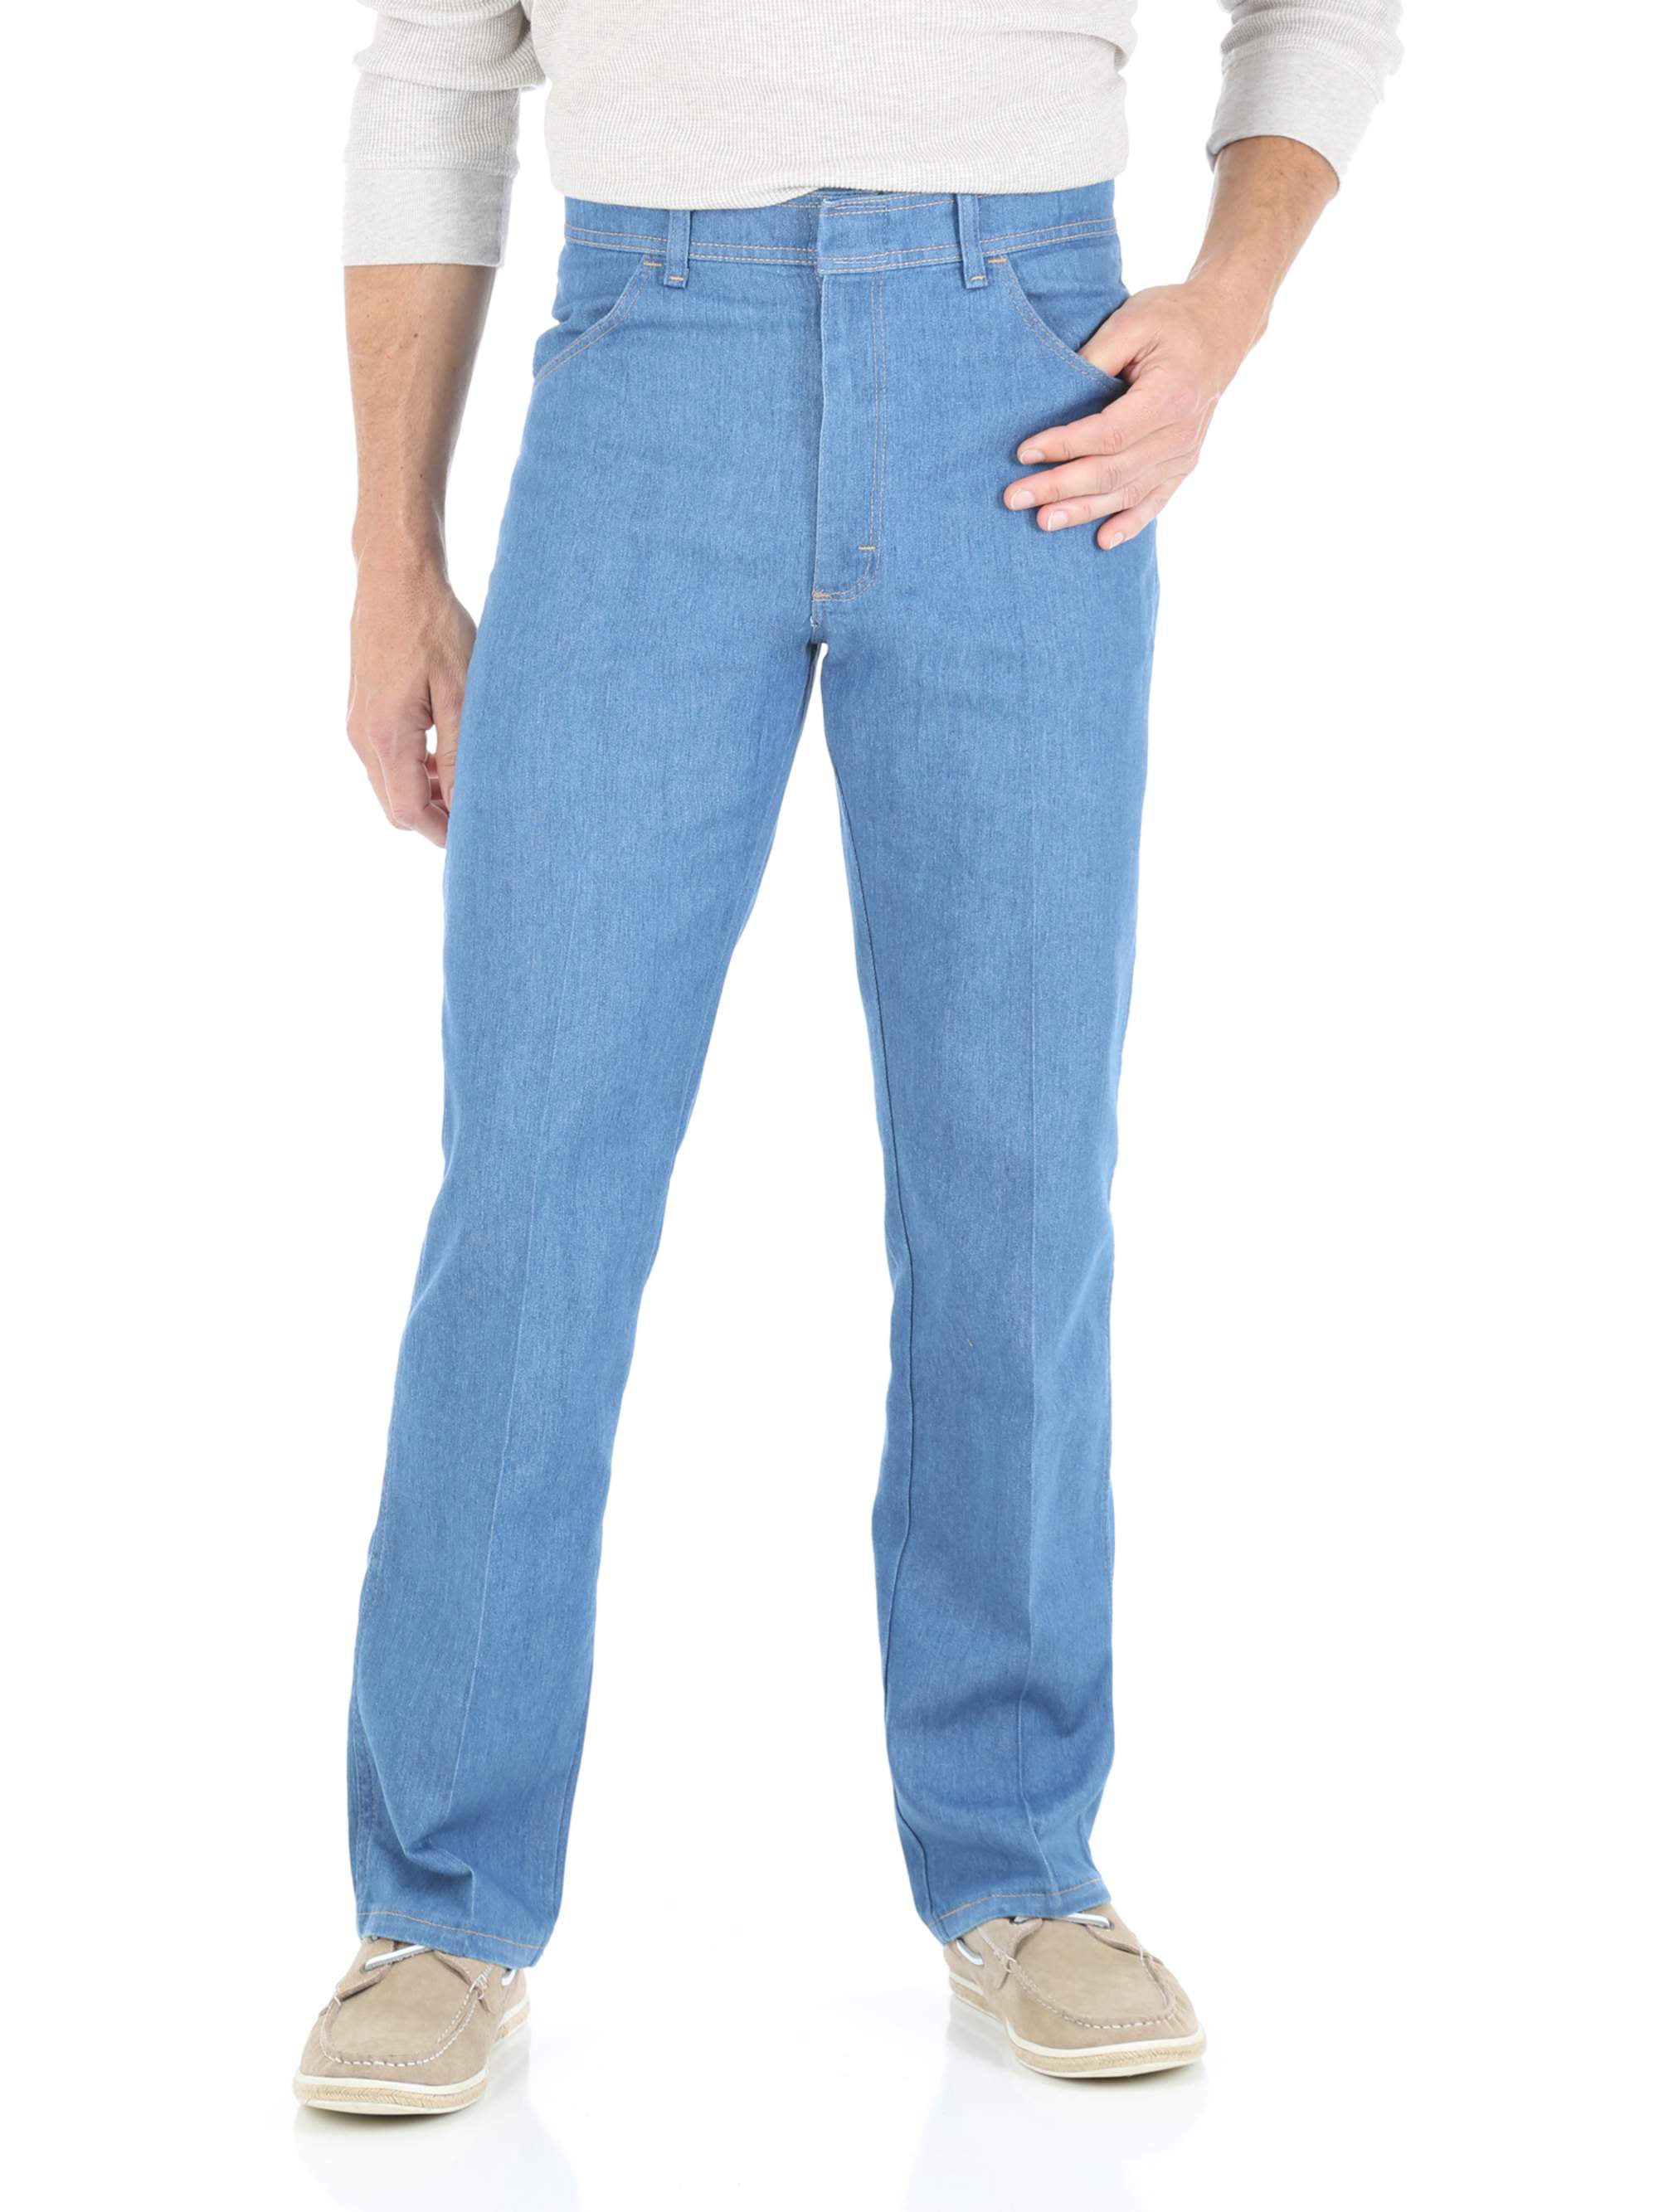 Wrangler - Hero - Big Men's Stretch Jeans with Flex-Fit Waist - Walmart.com